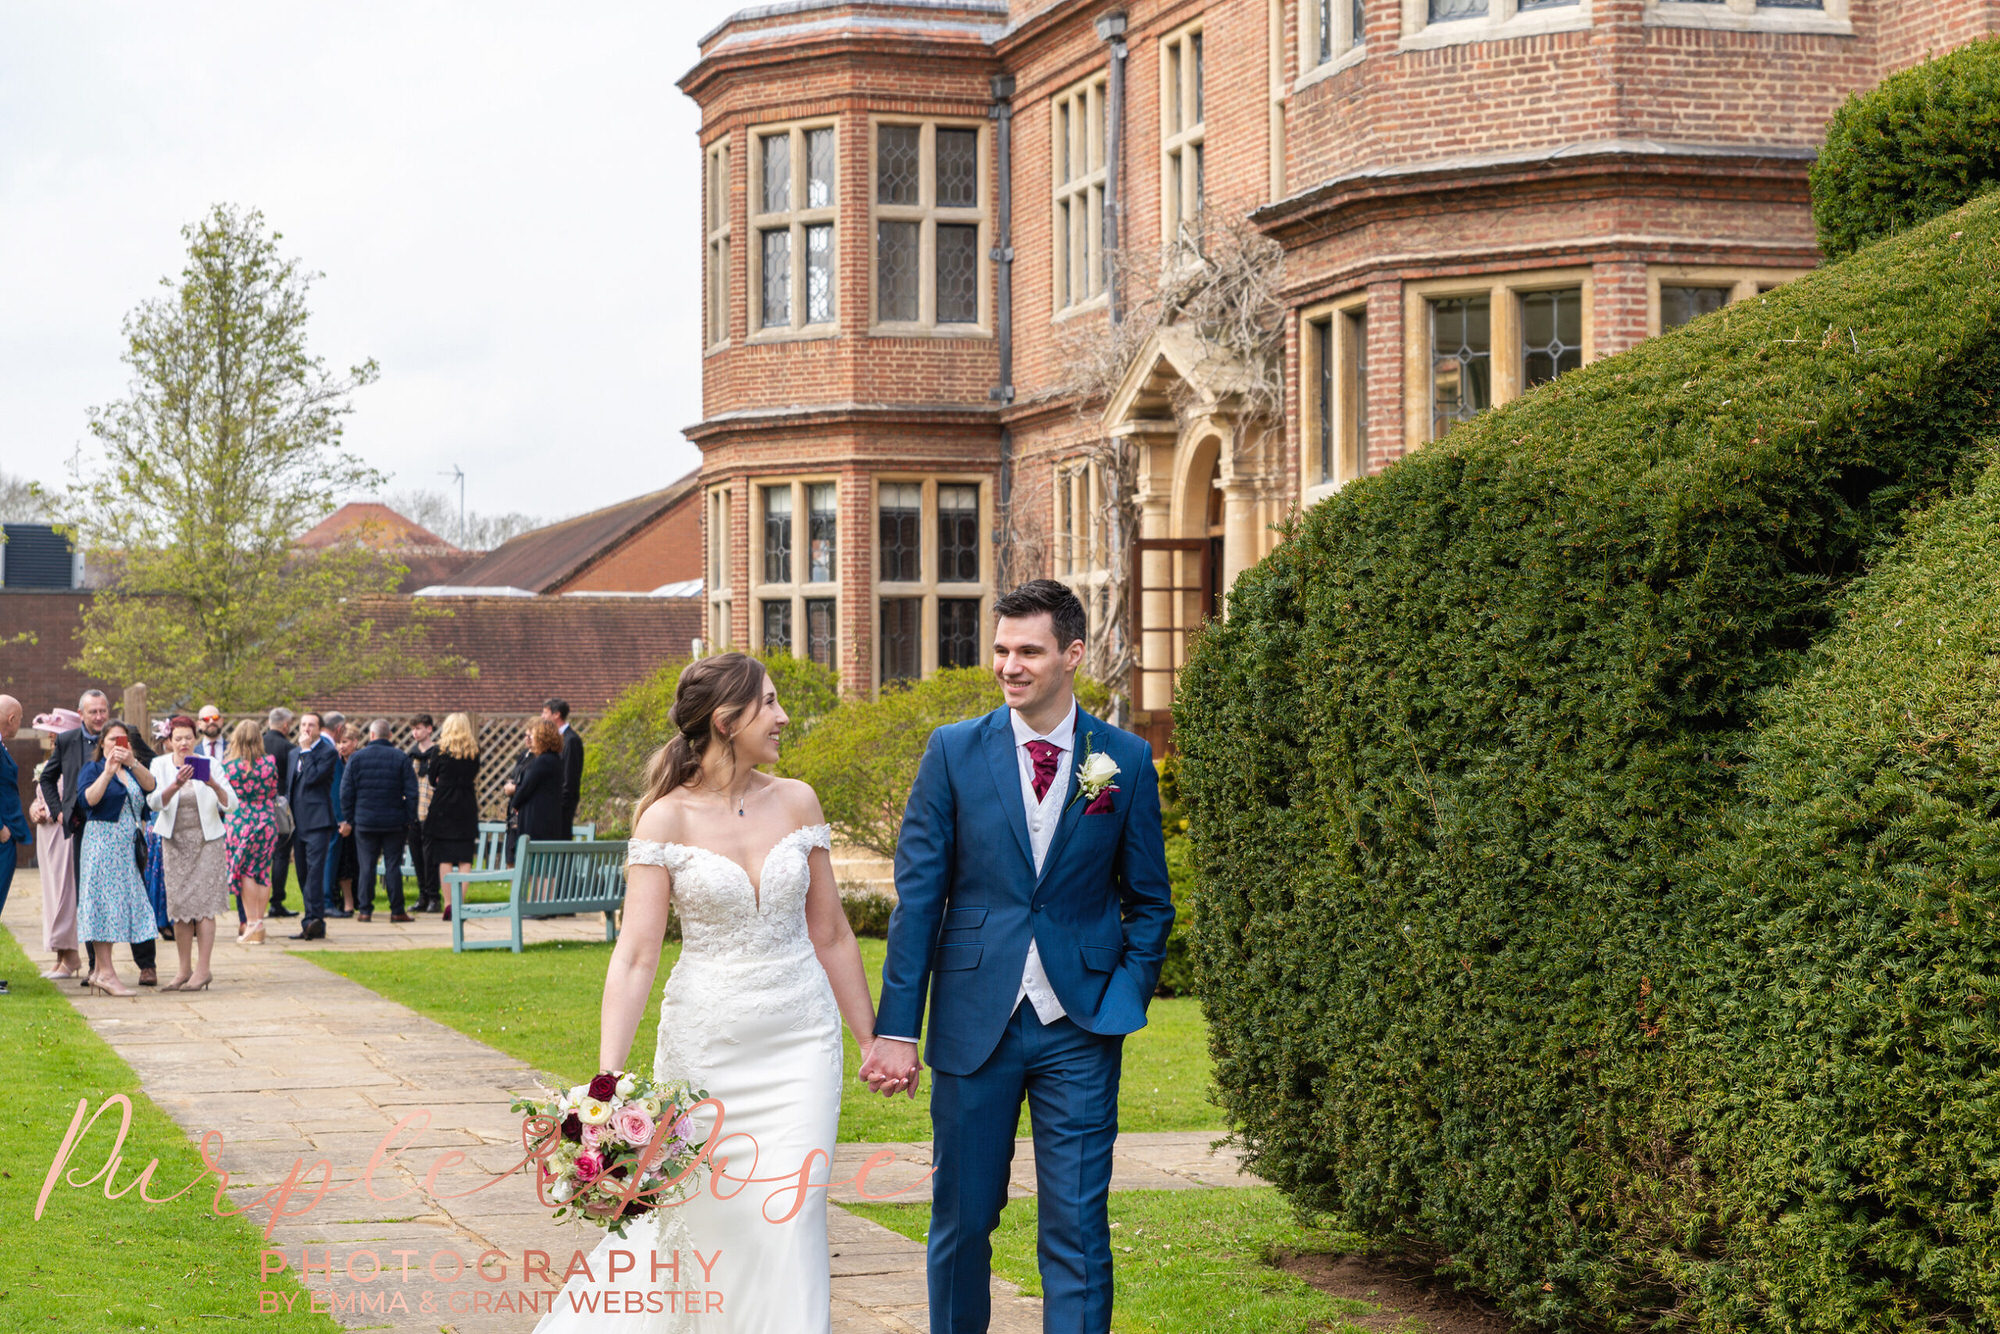 Hannah & Christian’s Wedding at Horwood House Milton Keynes